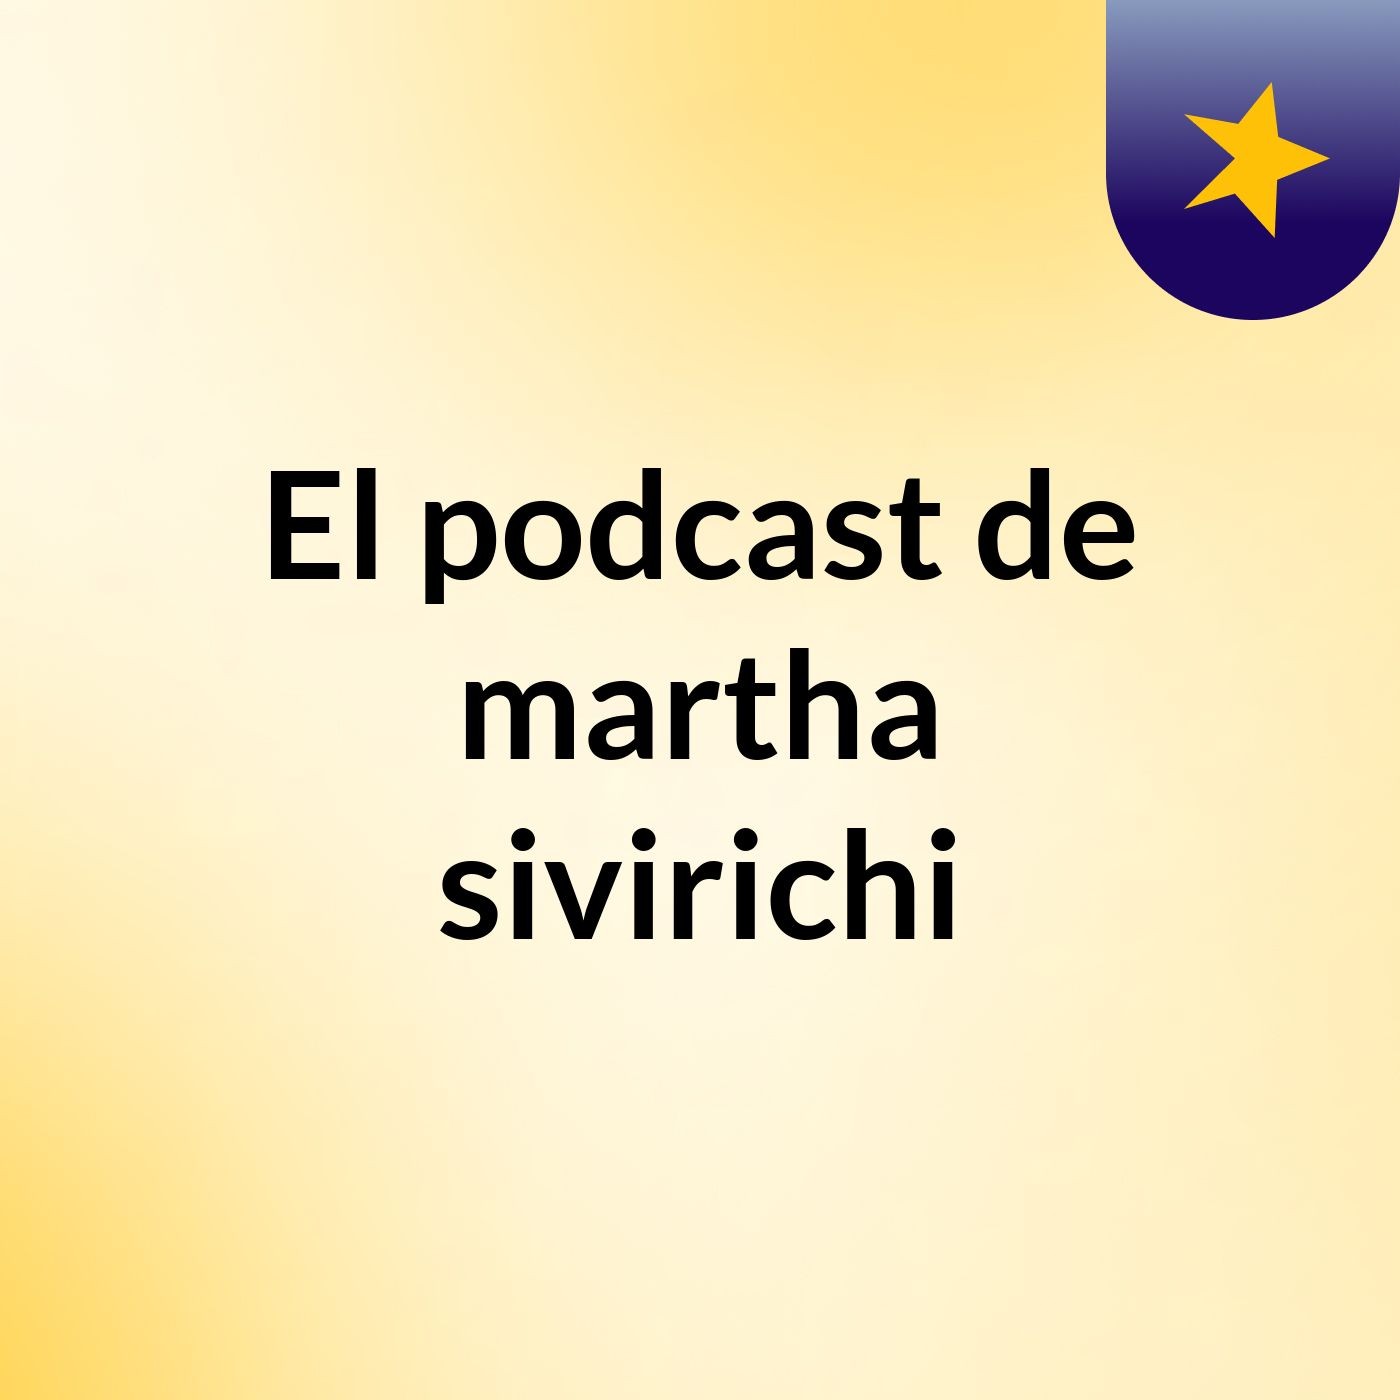 El podcast de martha sivirichi